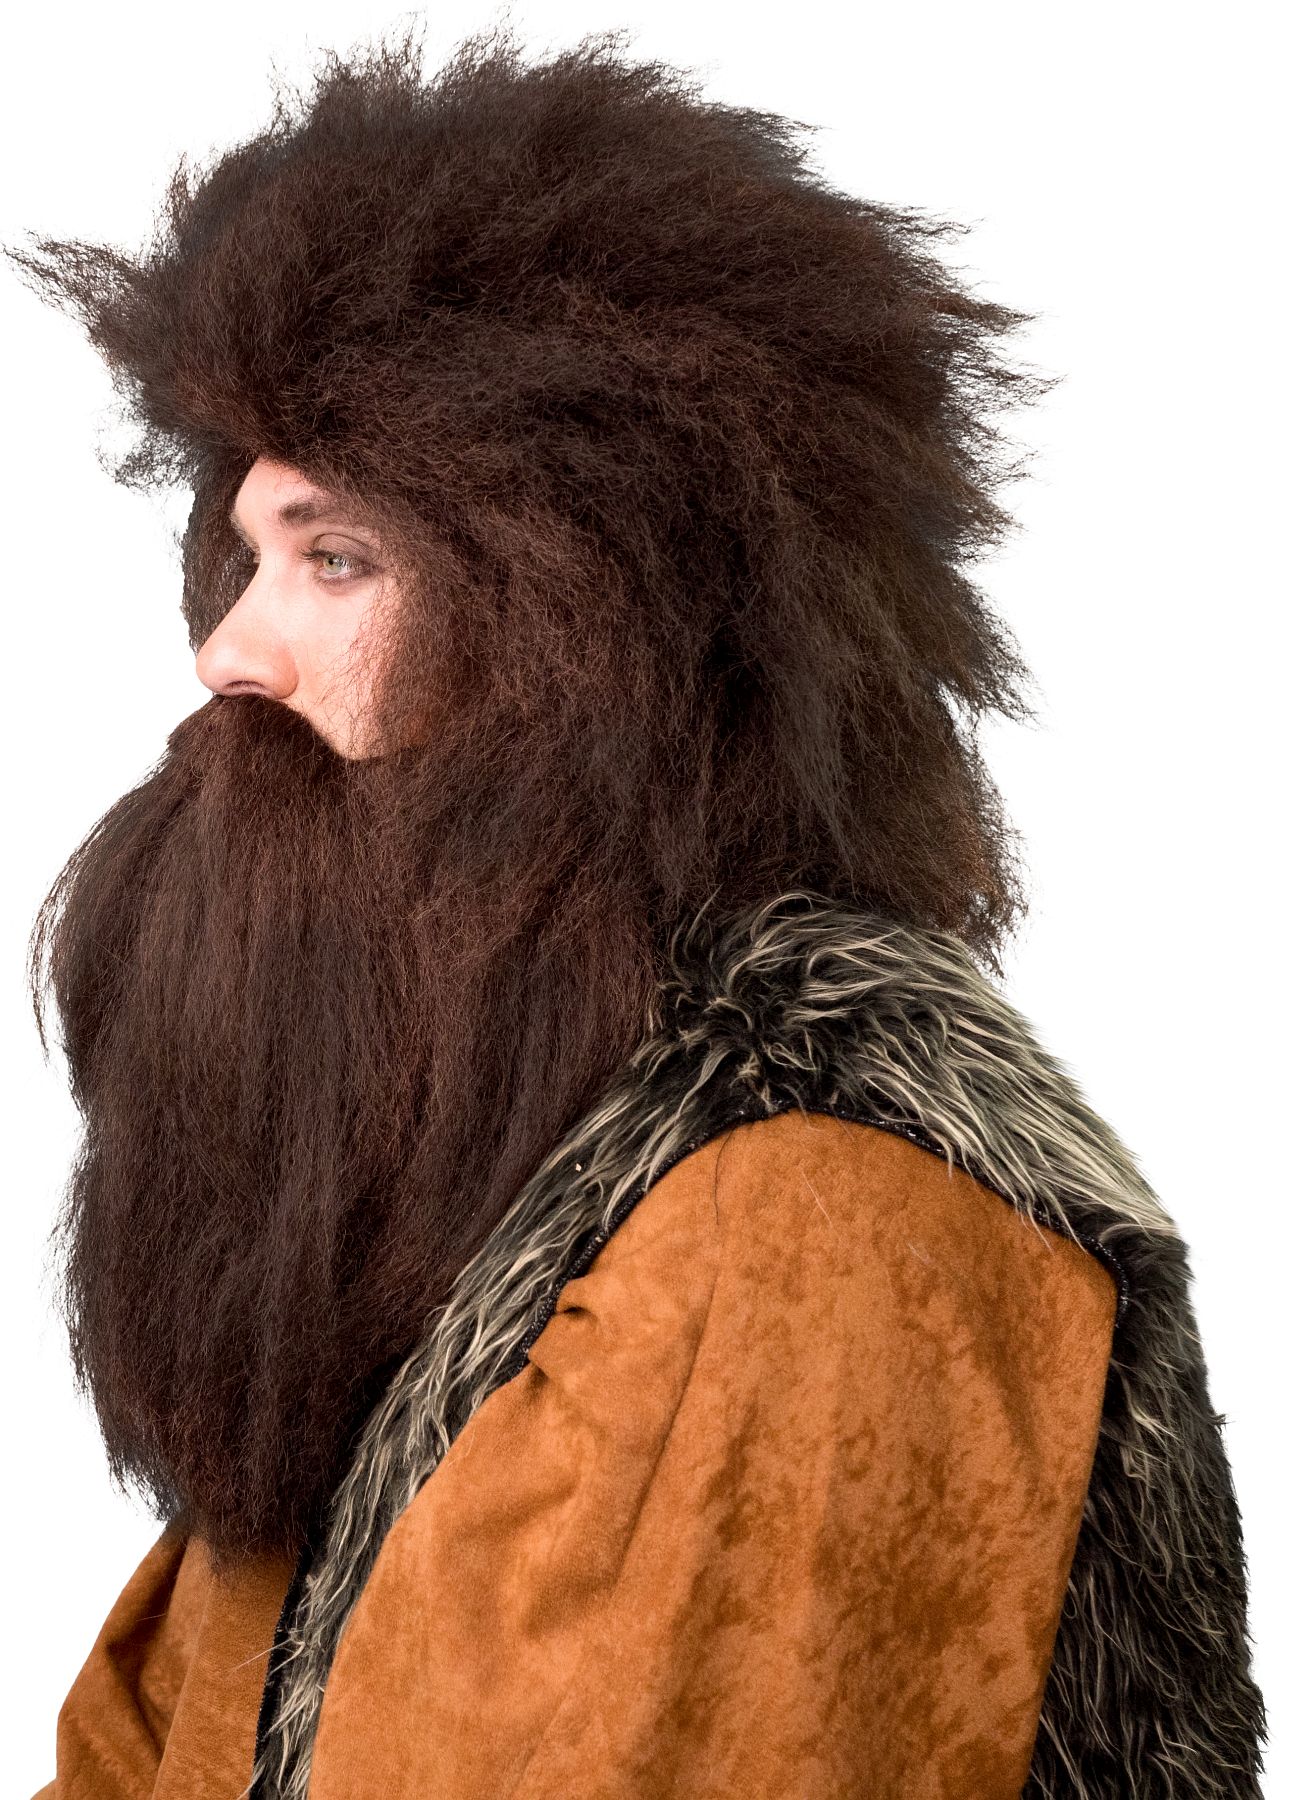 Prehistoric man, Wig with beard